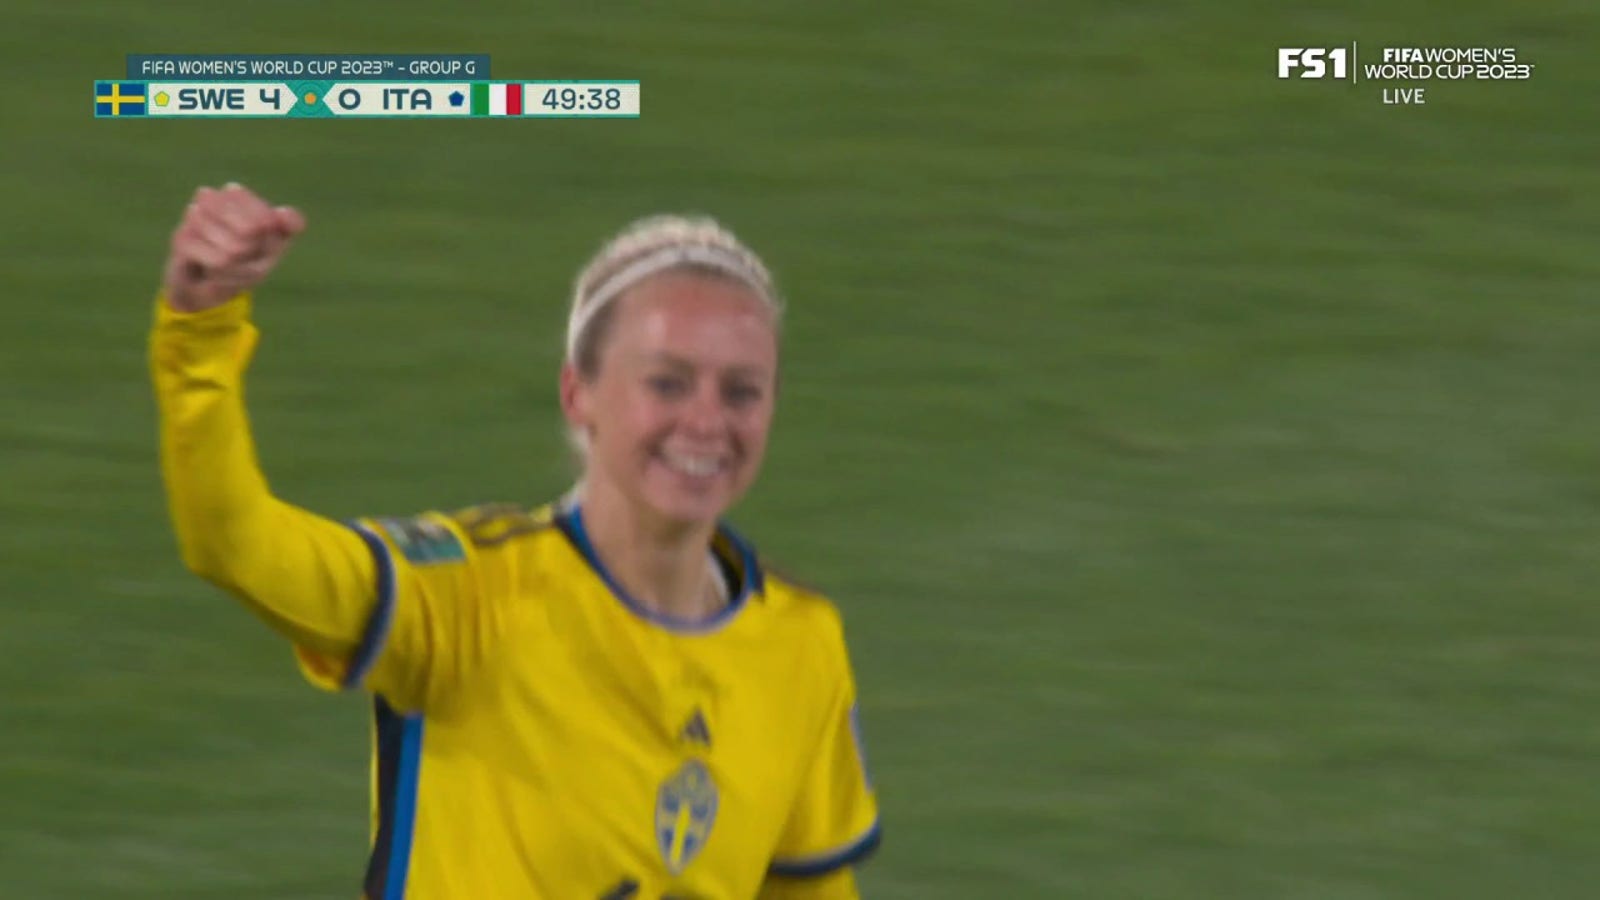 Sweden vs. Italy live updates: Sweden dominating Italy